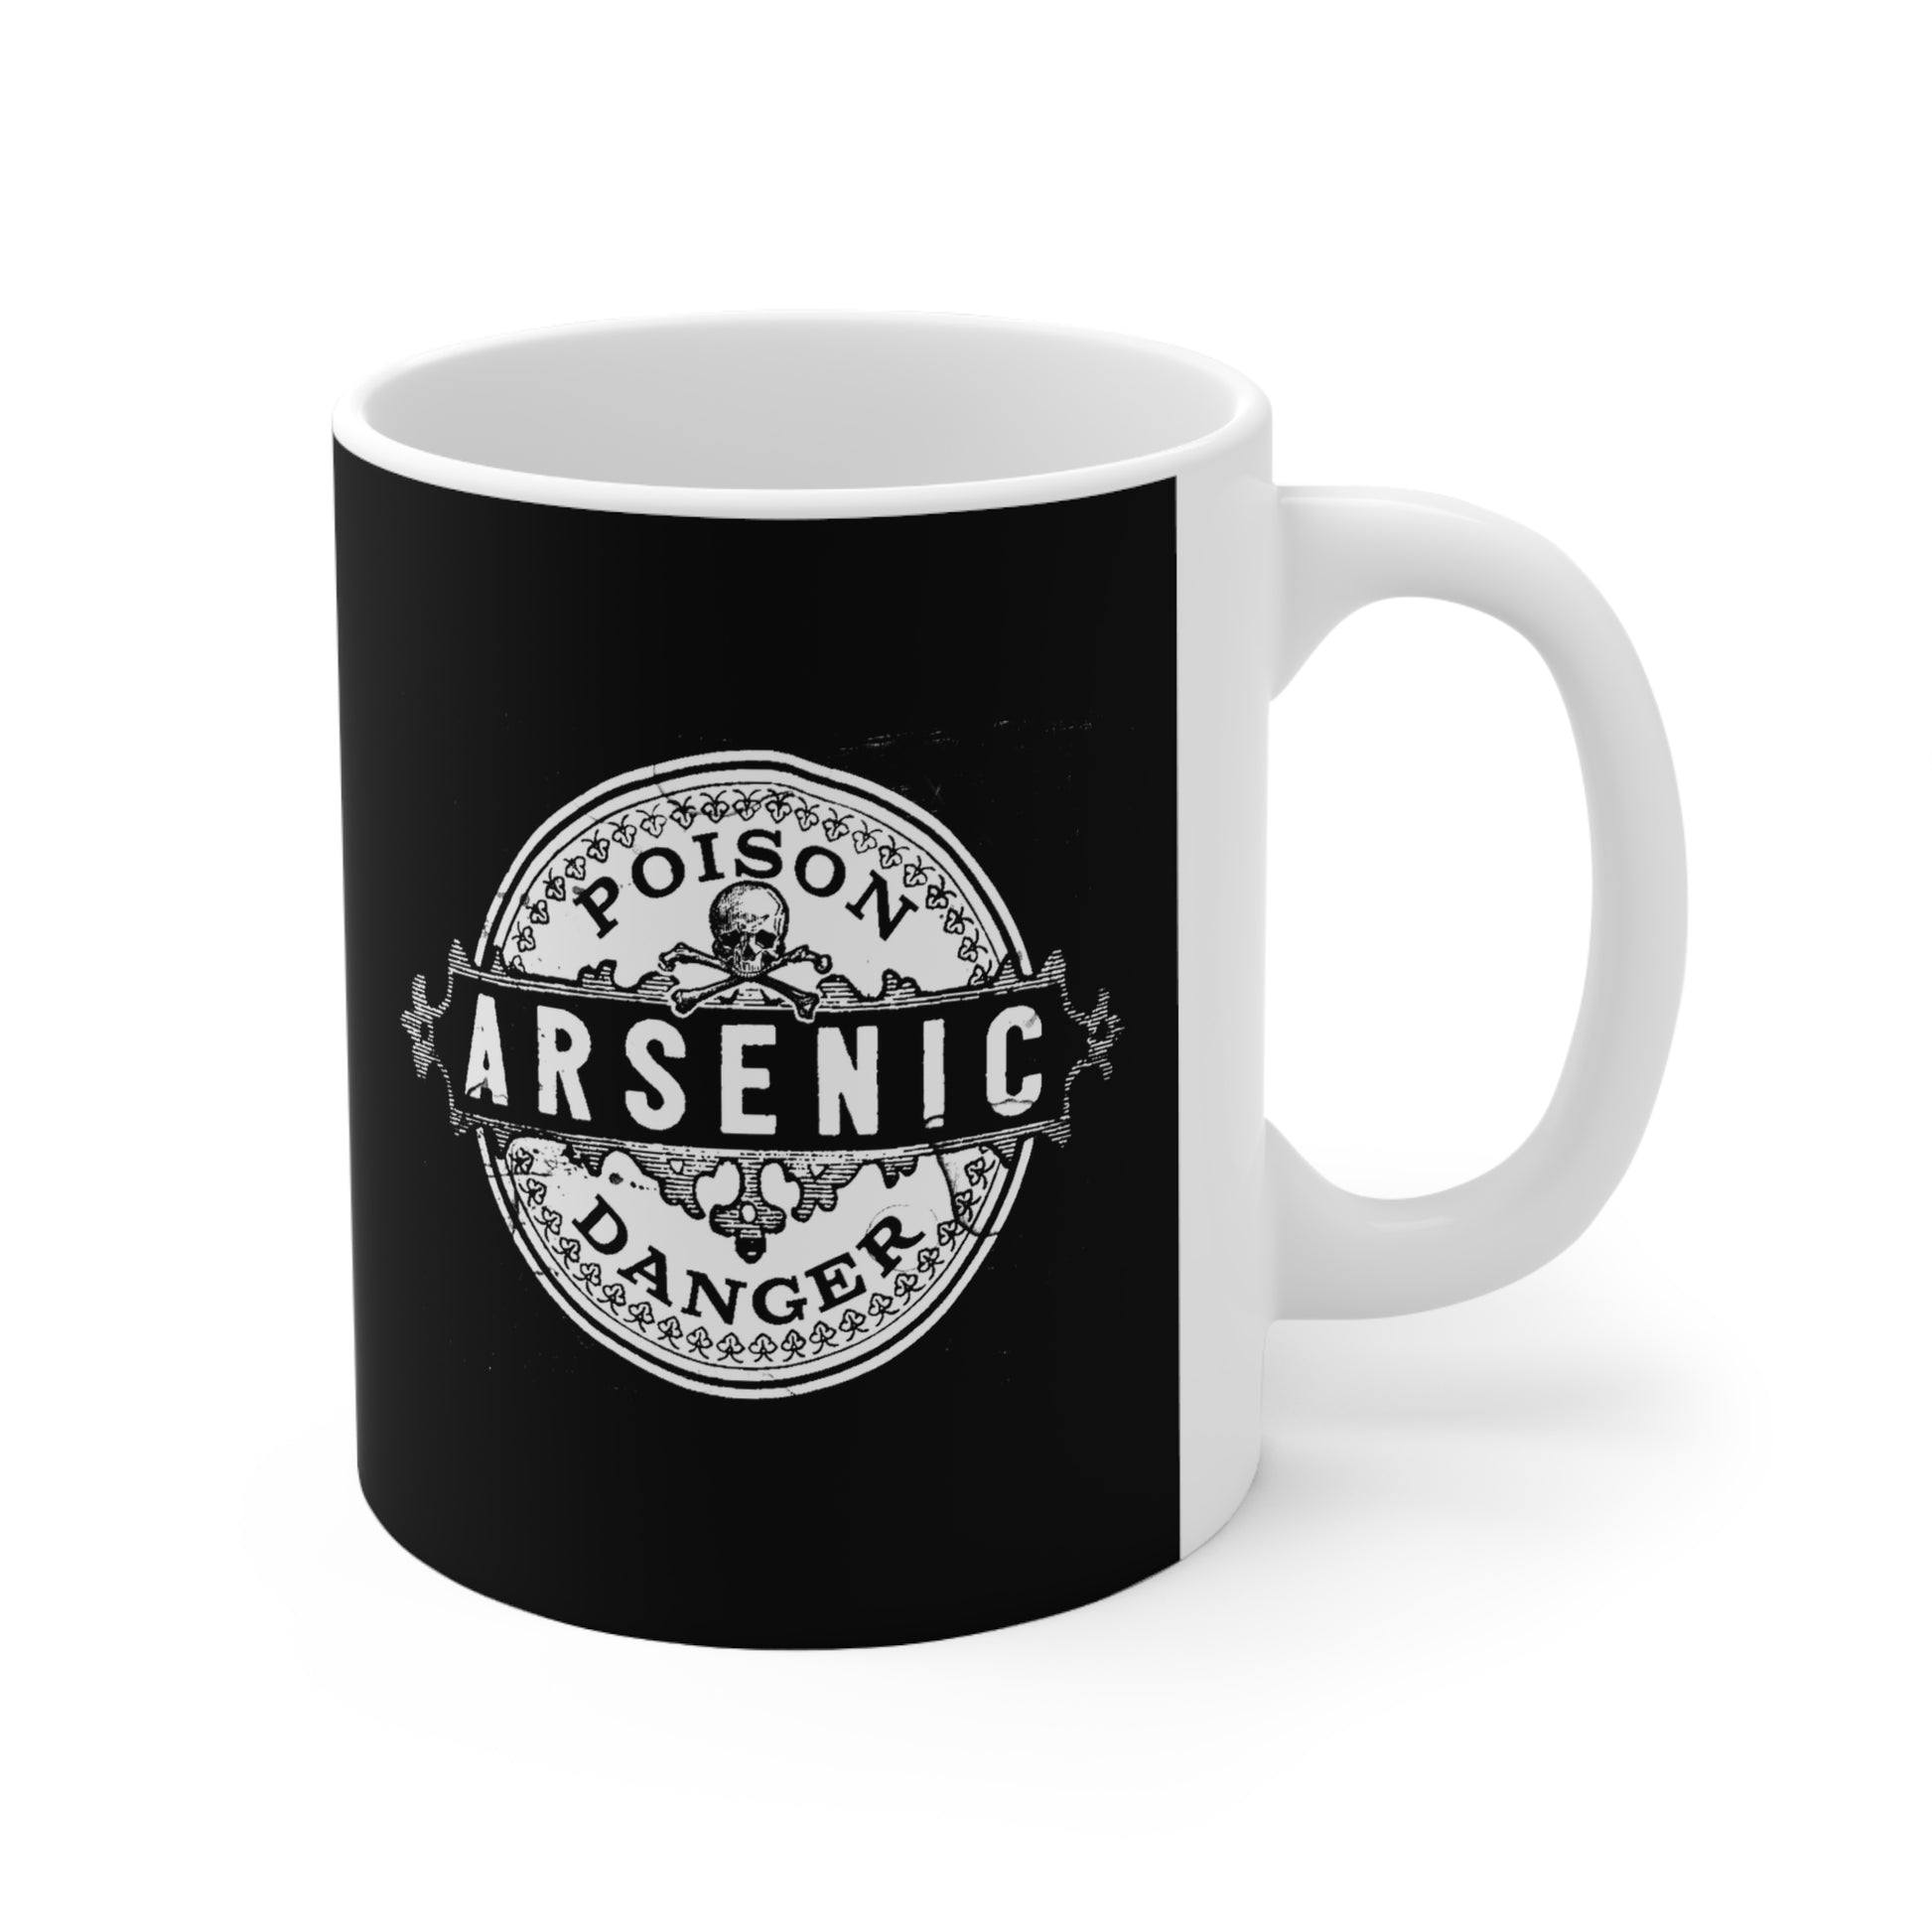 Arsenic Vintage Poison Label Mug 11oz - Geek House Creations